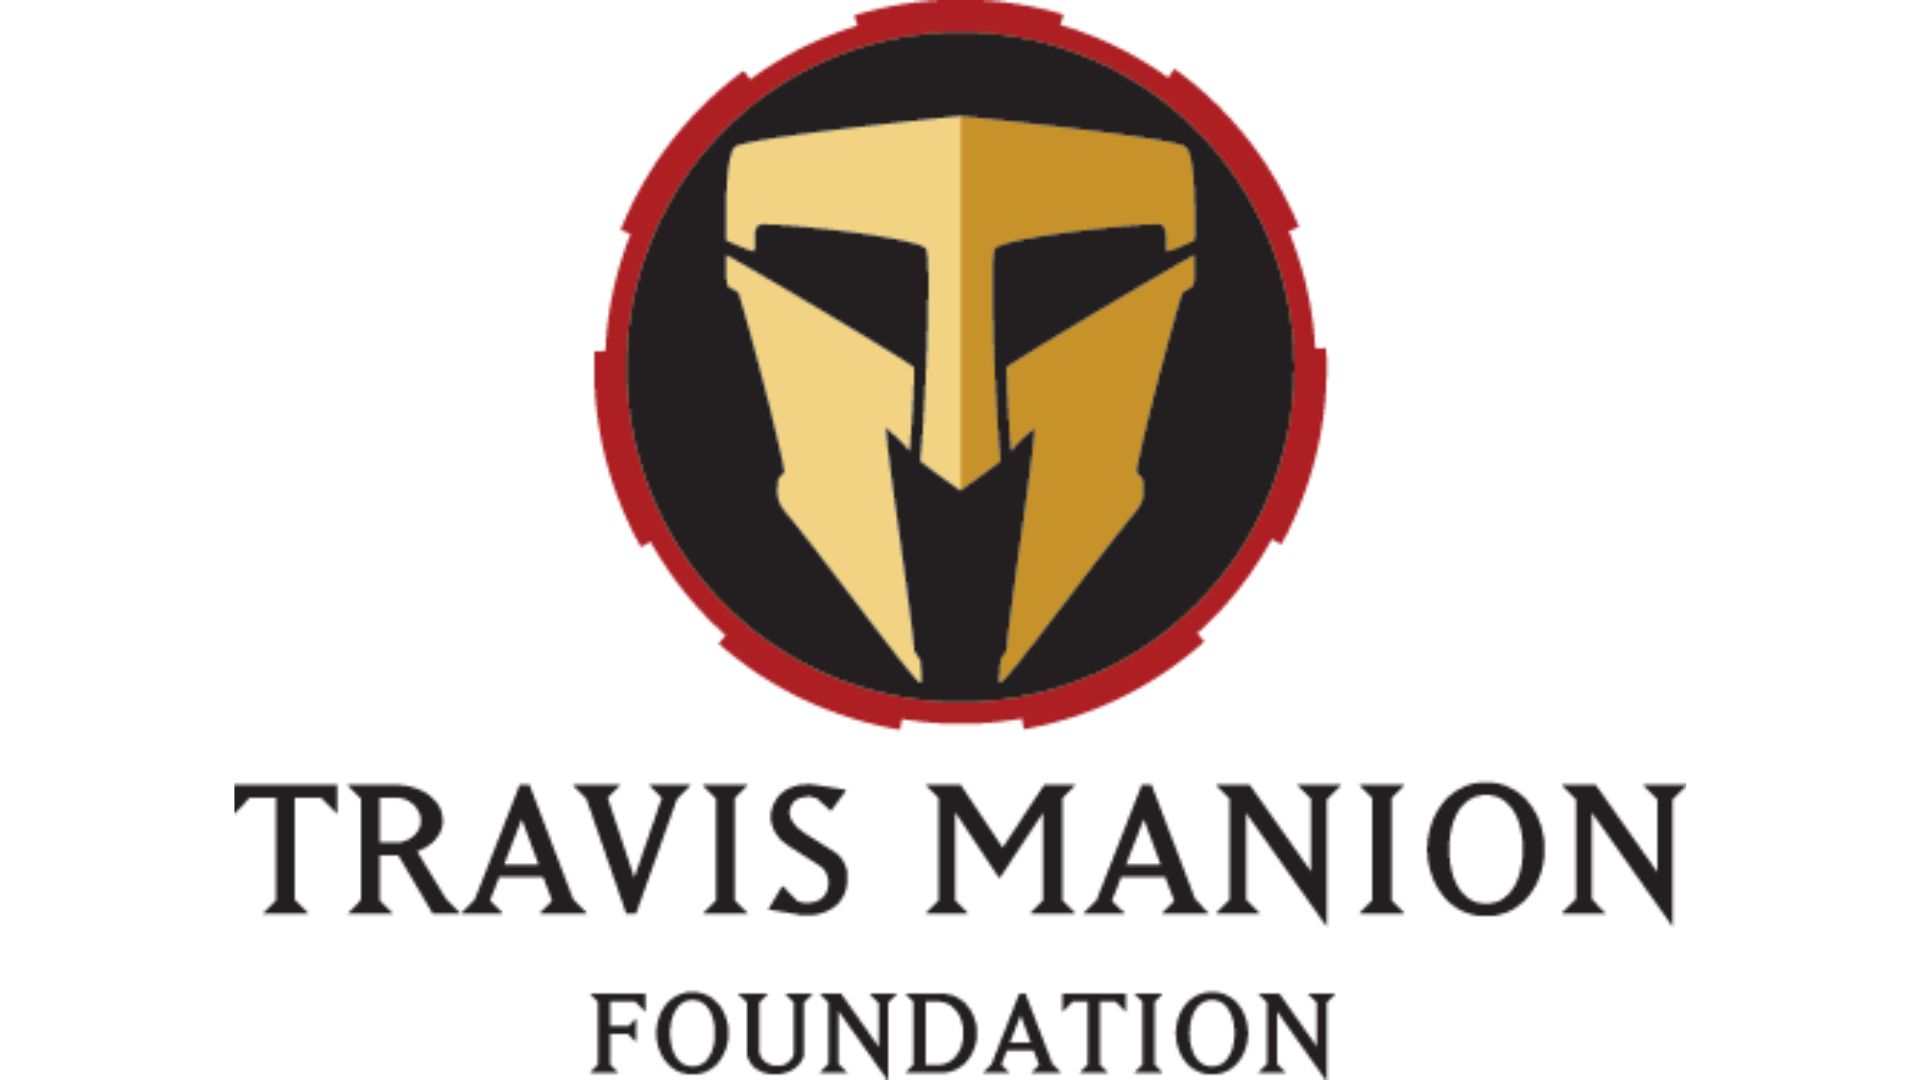 The Travis Manion Foundation.